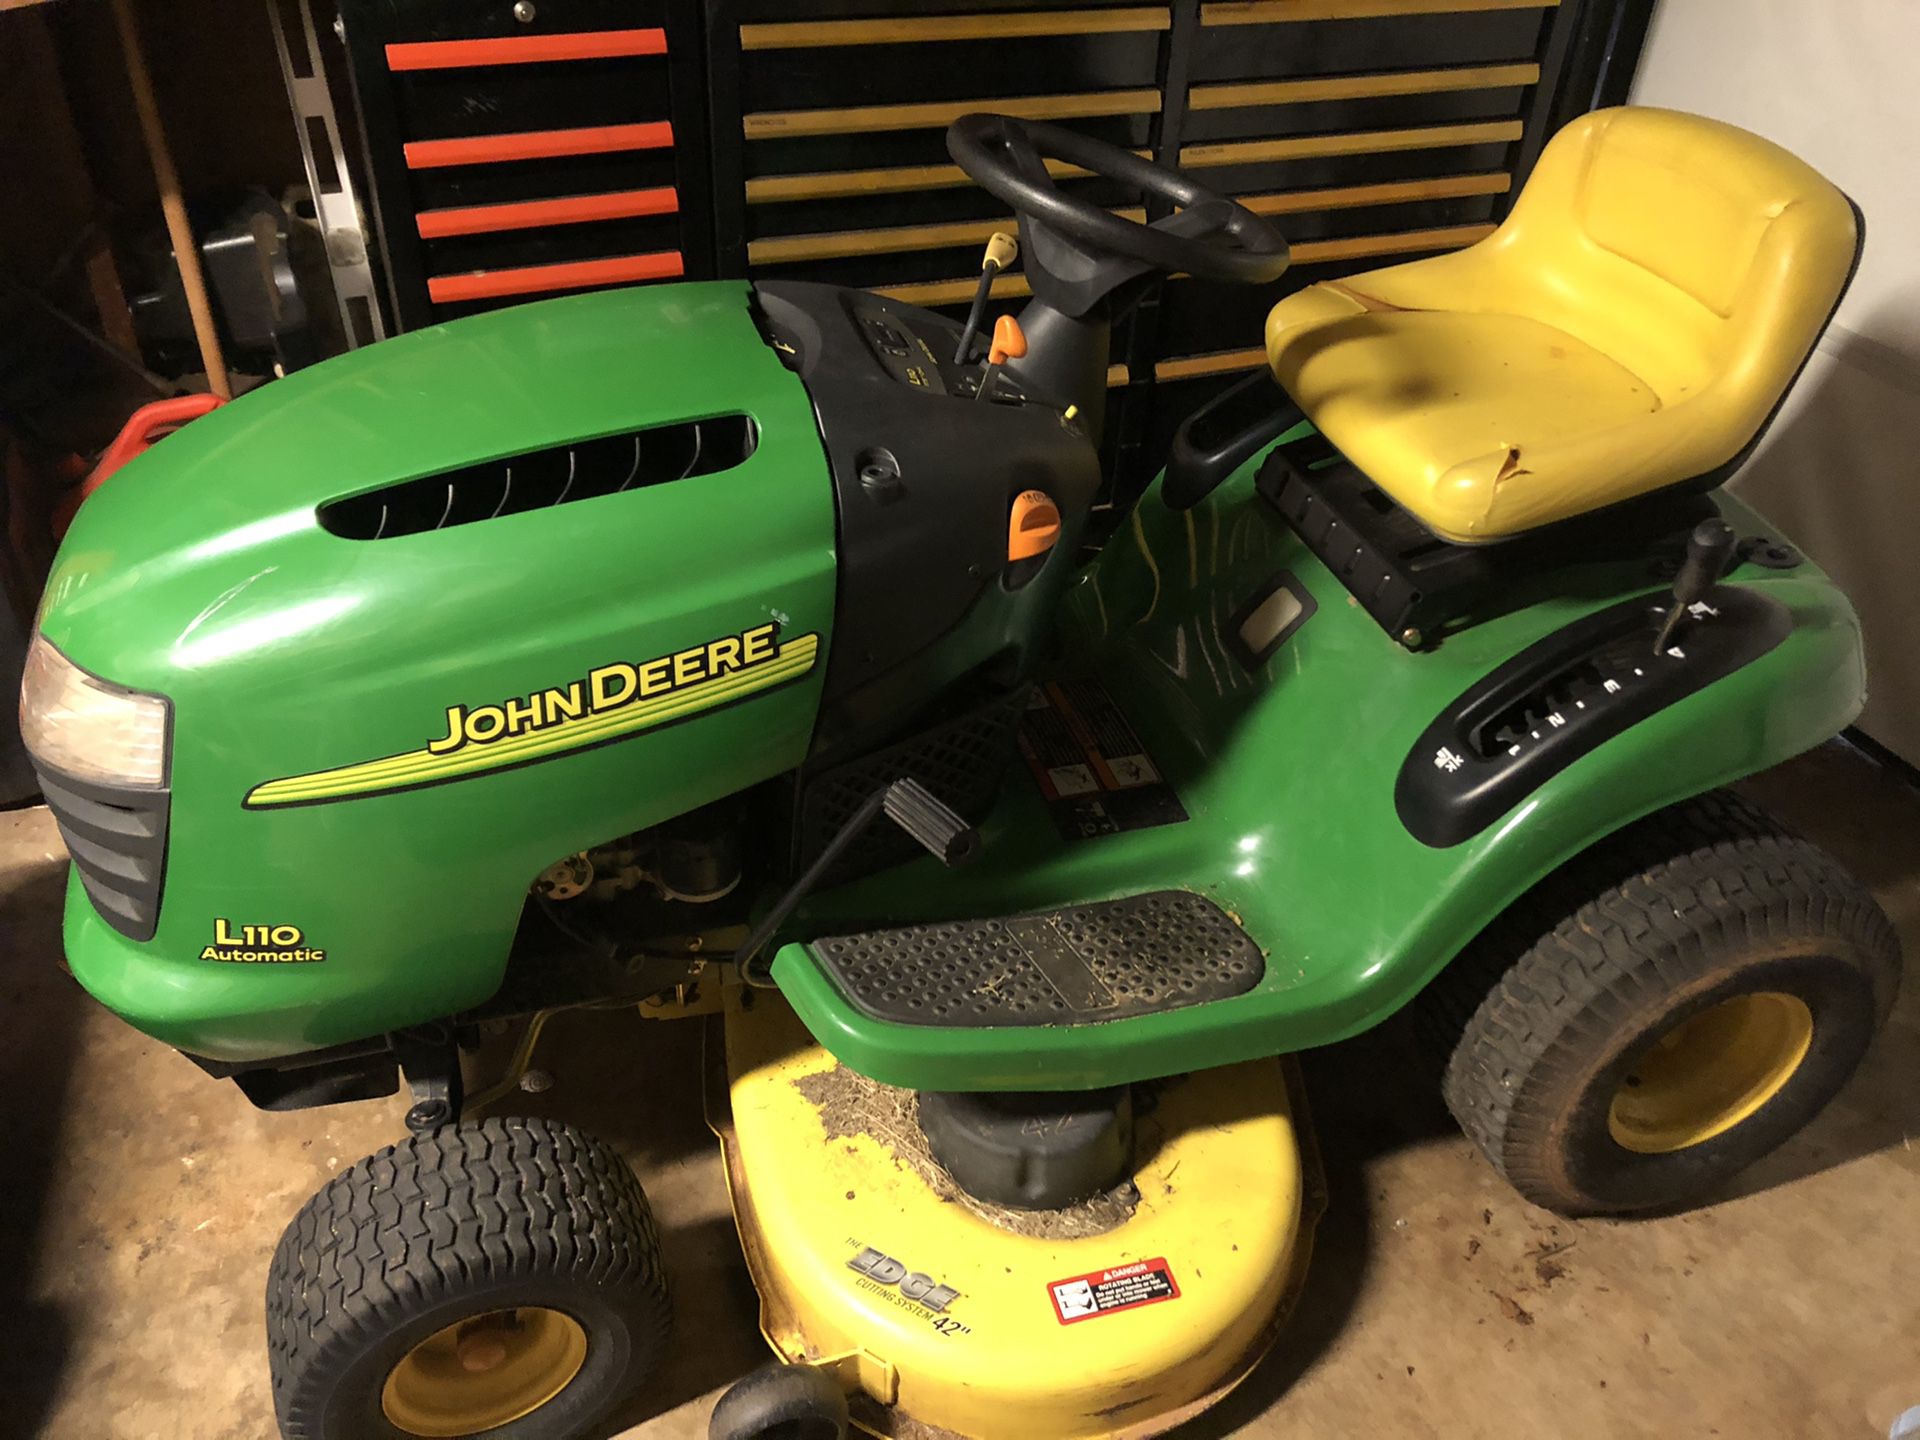 John Deere 42” Riding Lawn Mower